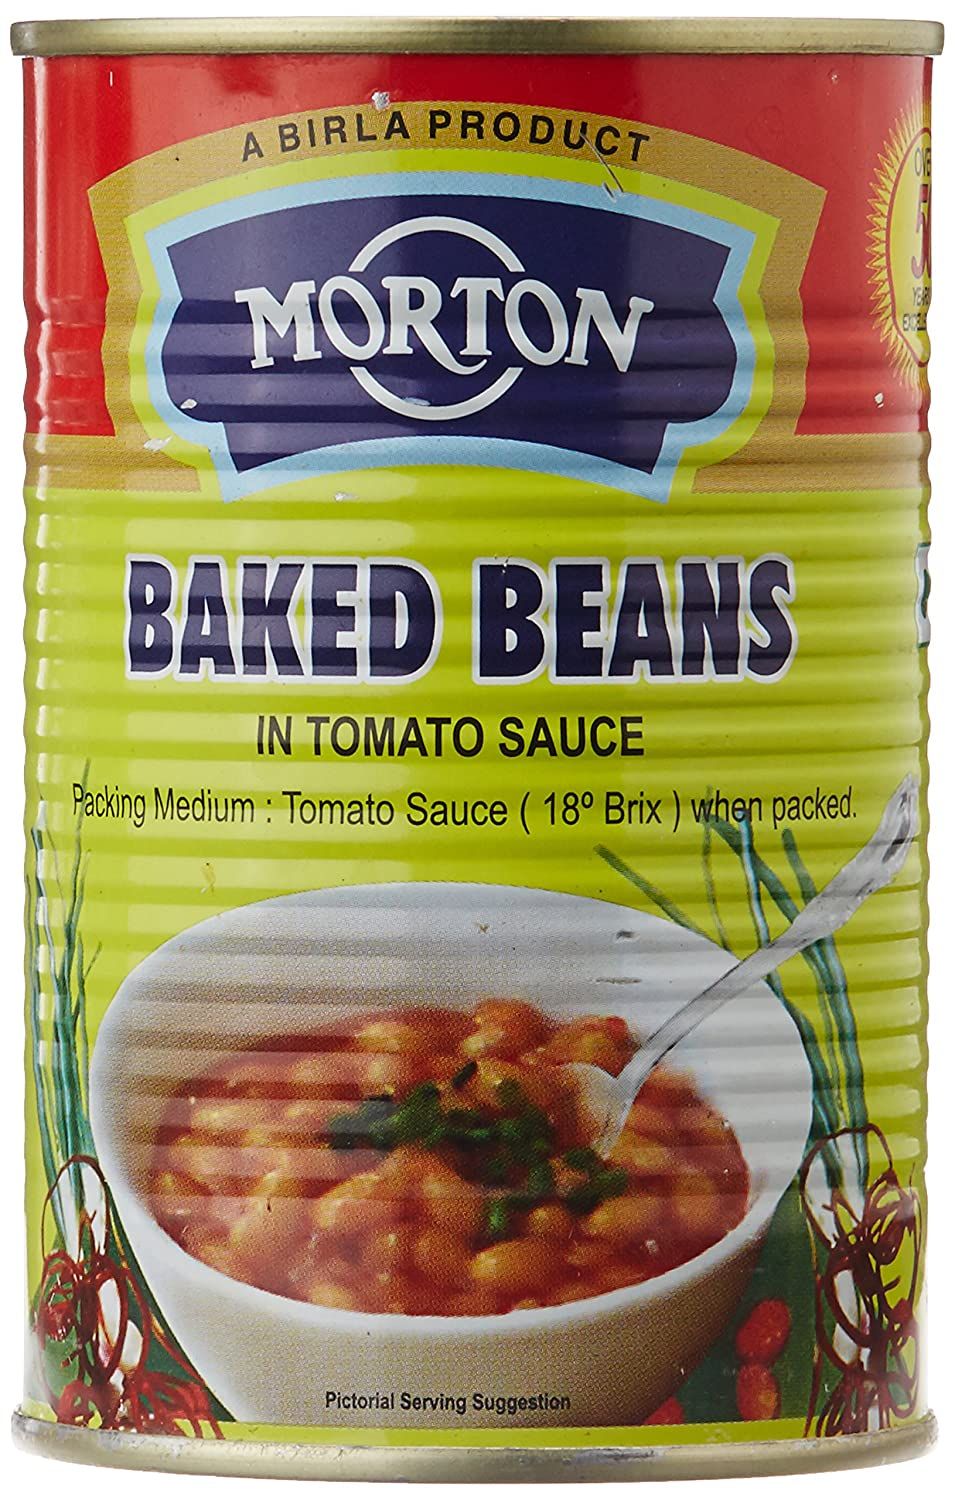 Morton Baked Beans Image